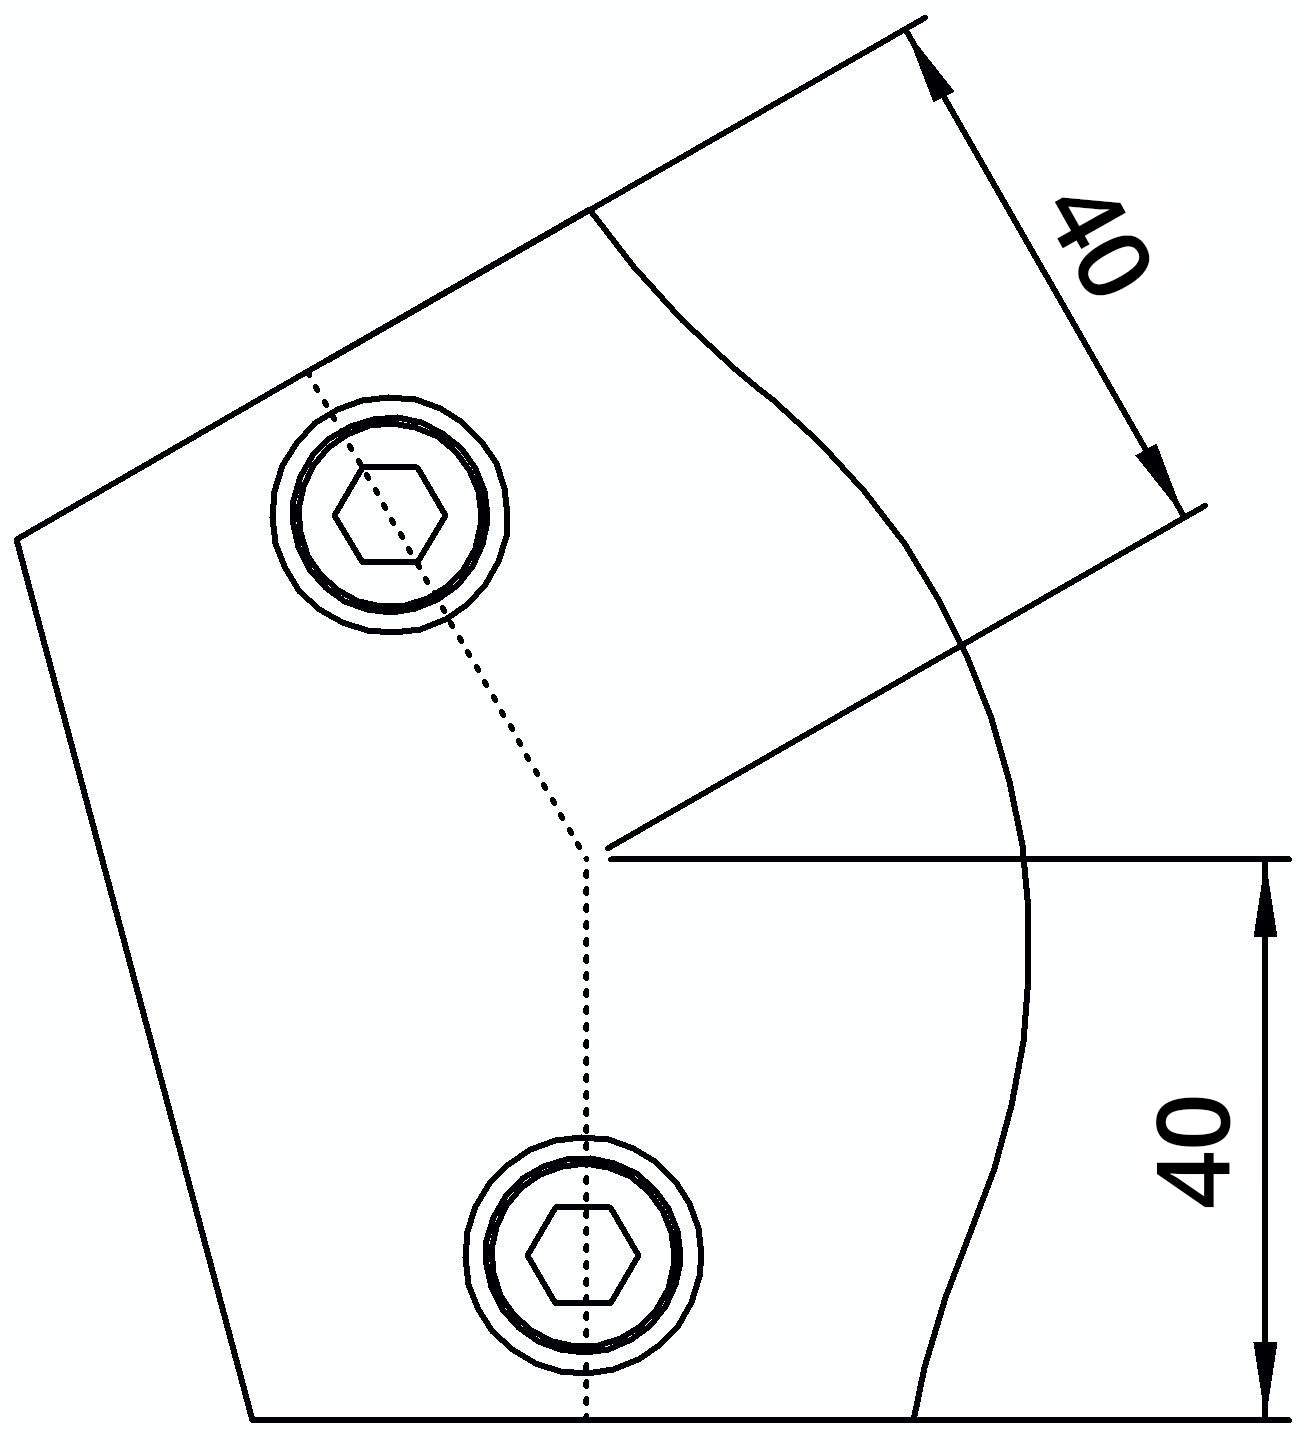 Rohrverbinder | Bogen variabel 15-60° | 124B34 | 33,7 mm | 1" | Feuerverzinkt u. Elektrogalvanisiert